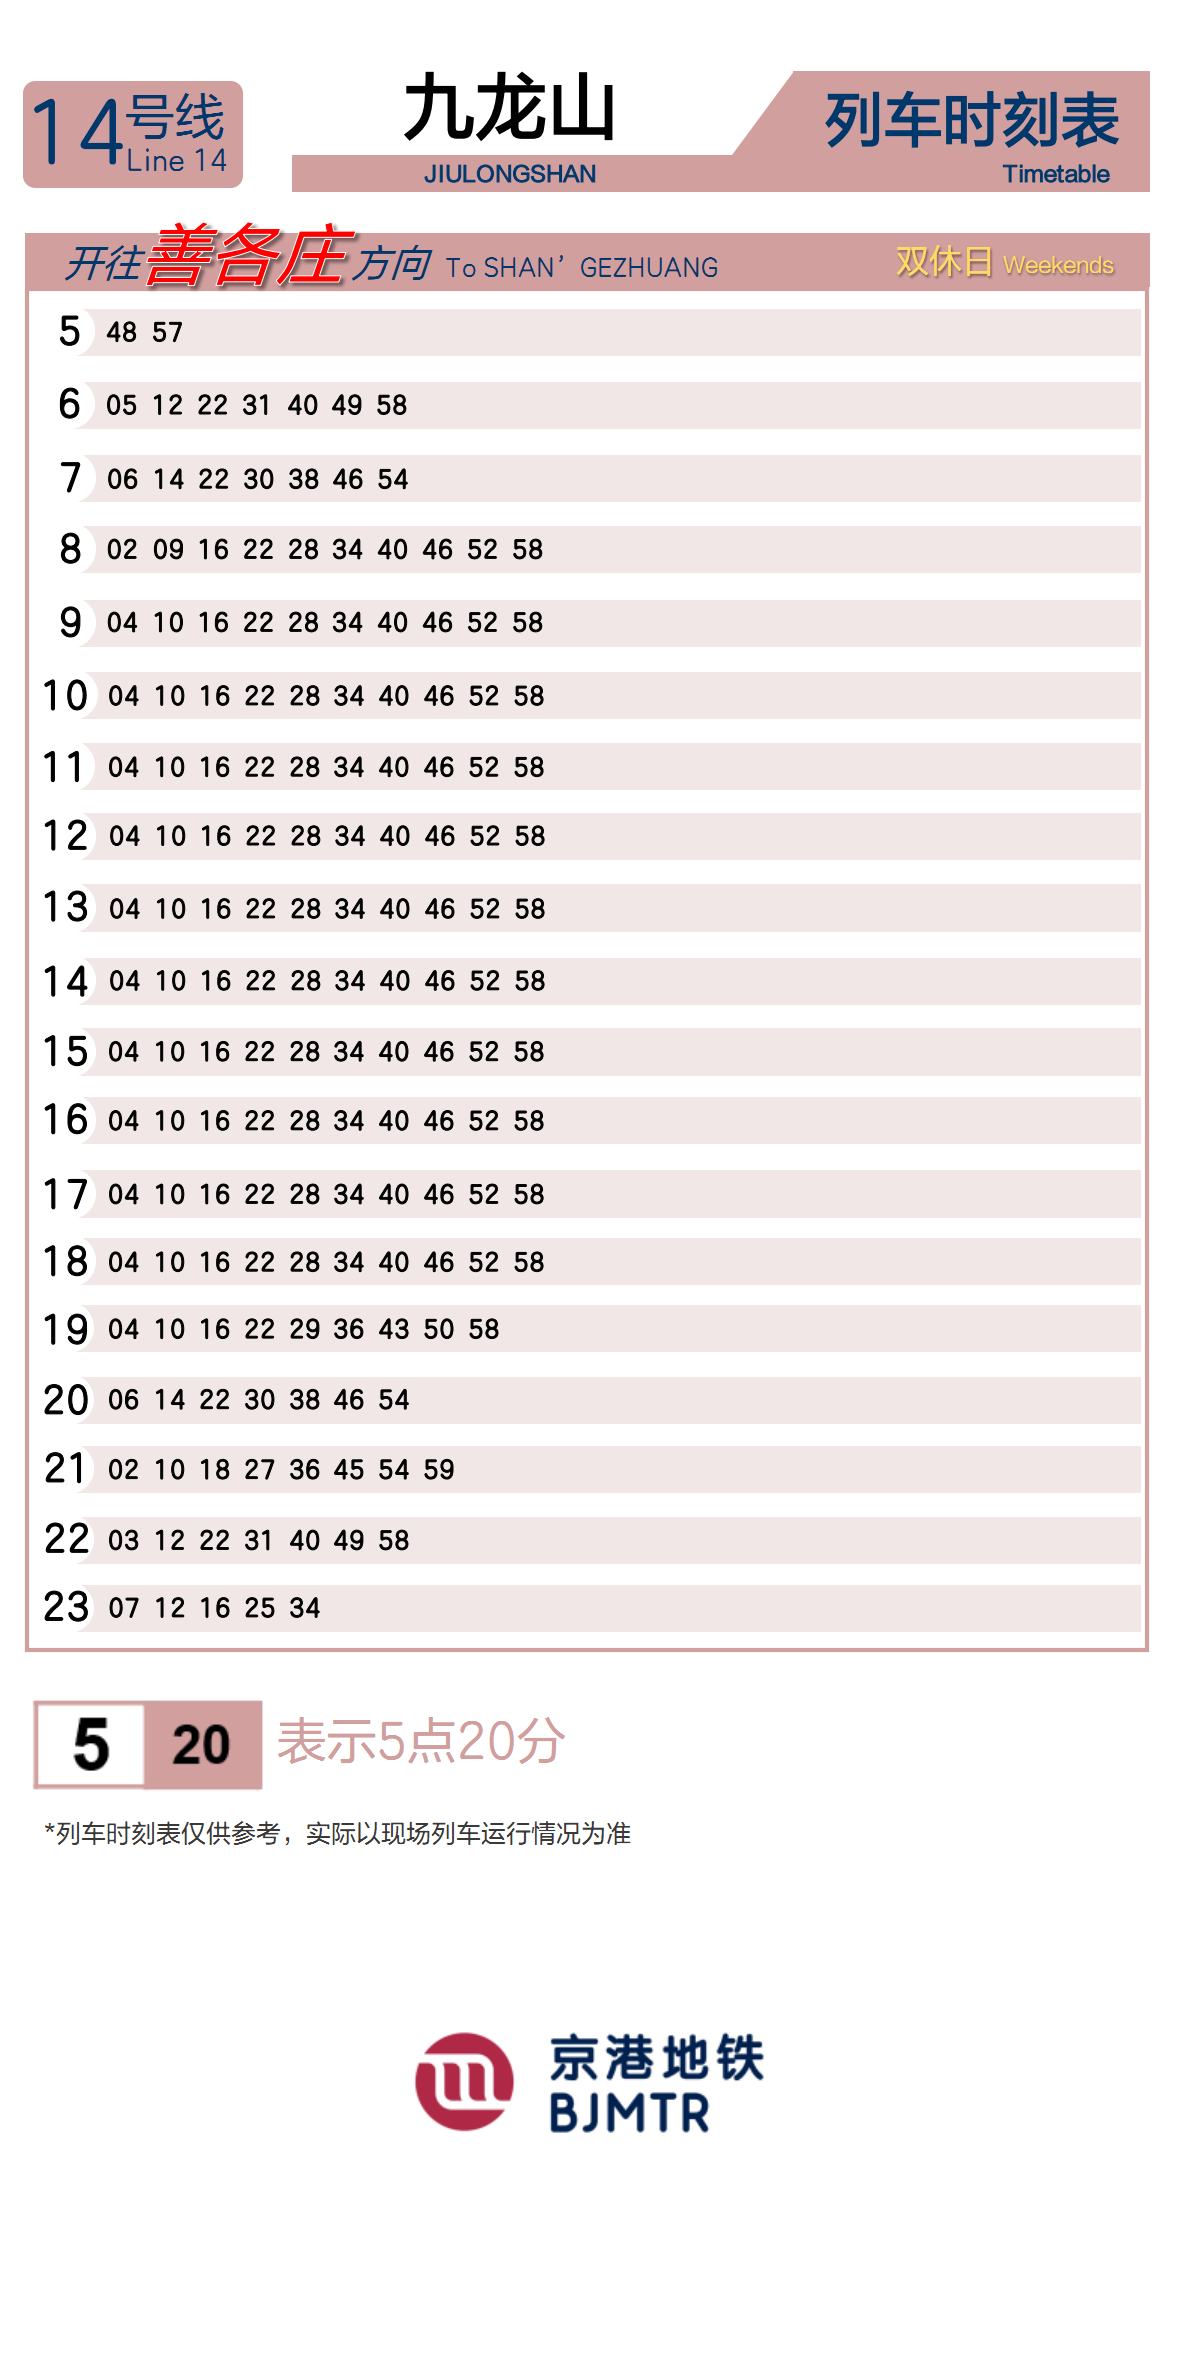 Line 14Jiulongshan时刻表